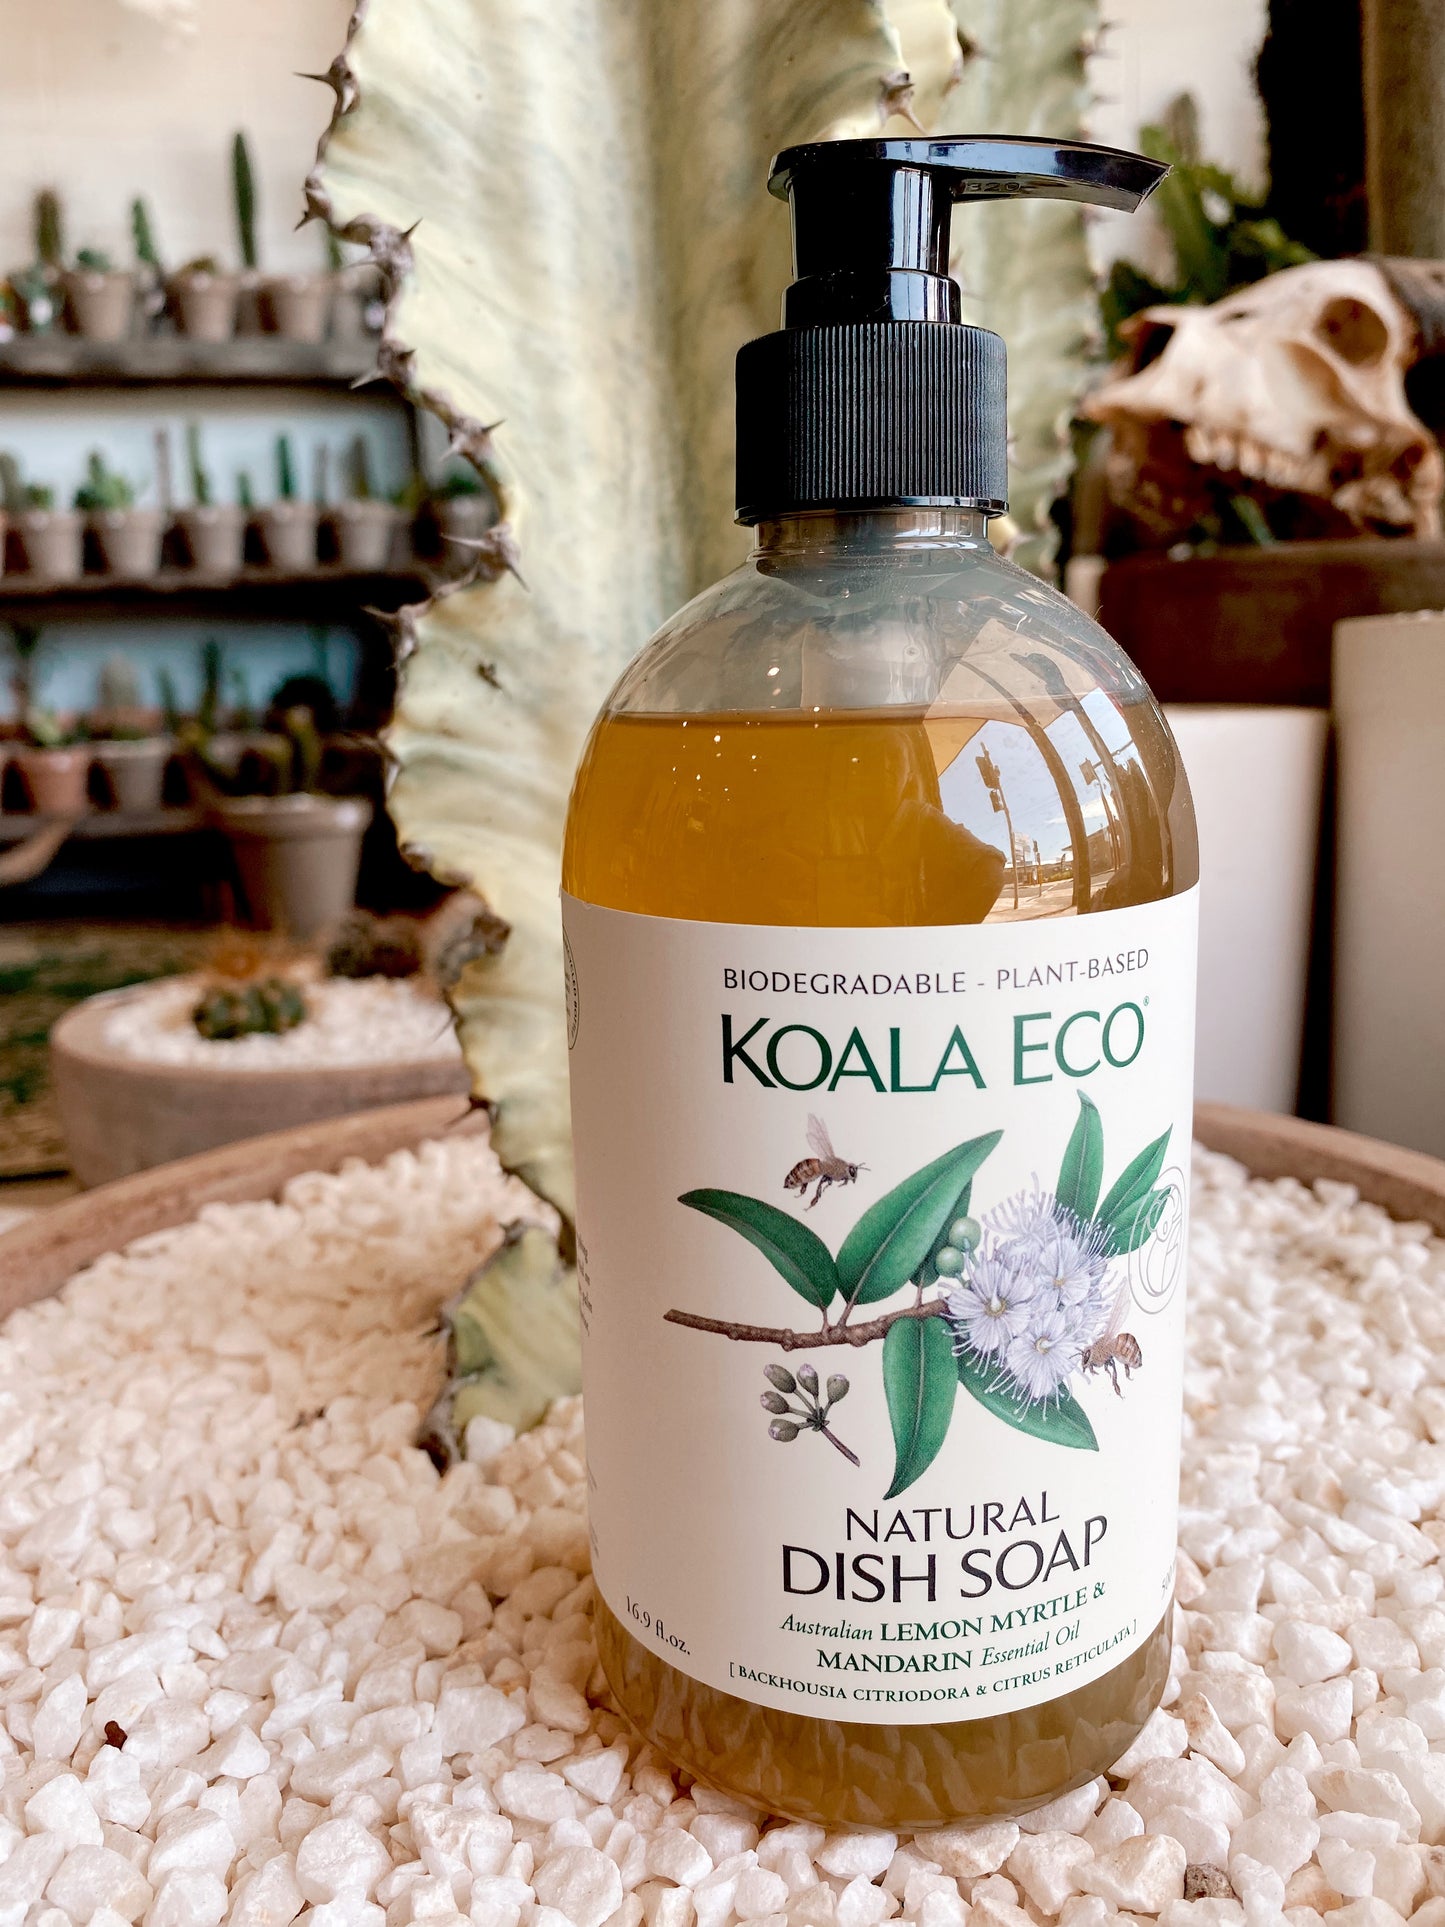 Koala Eco: Natural Dish Soap